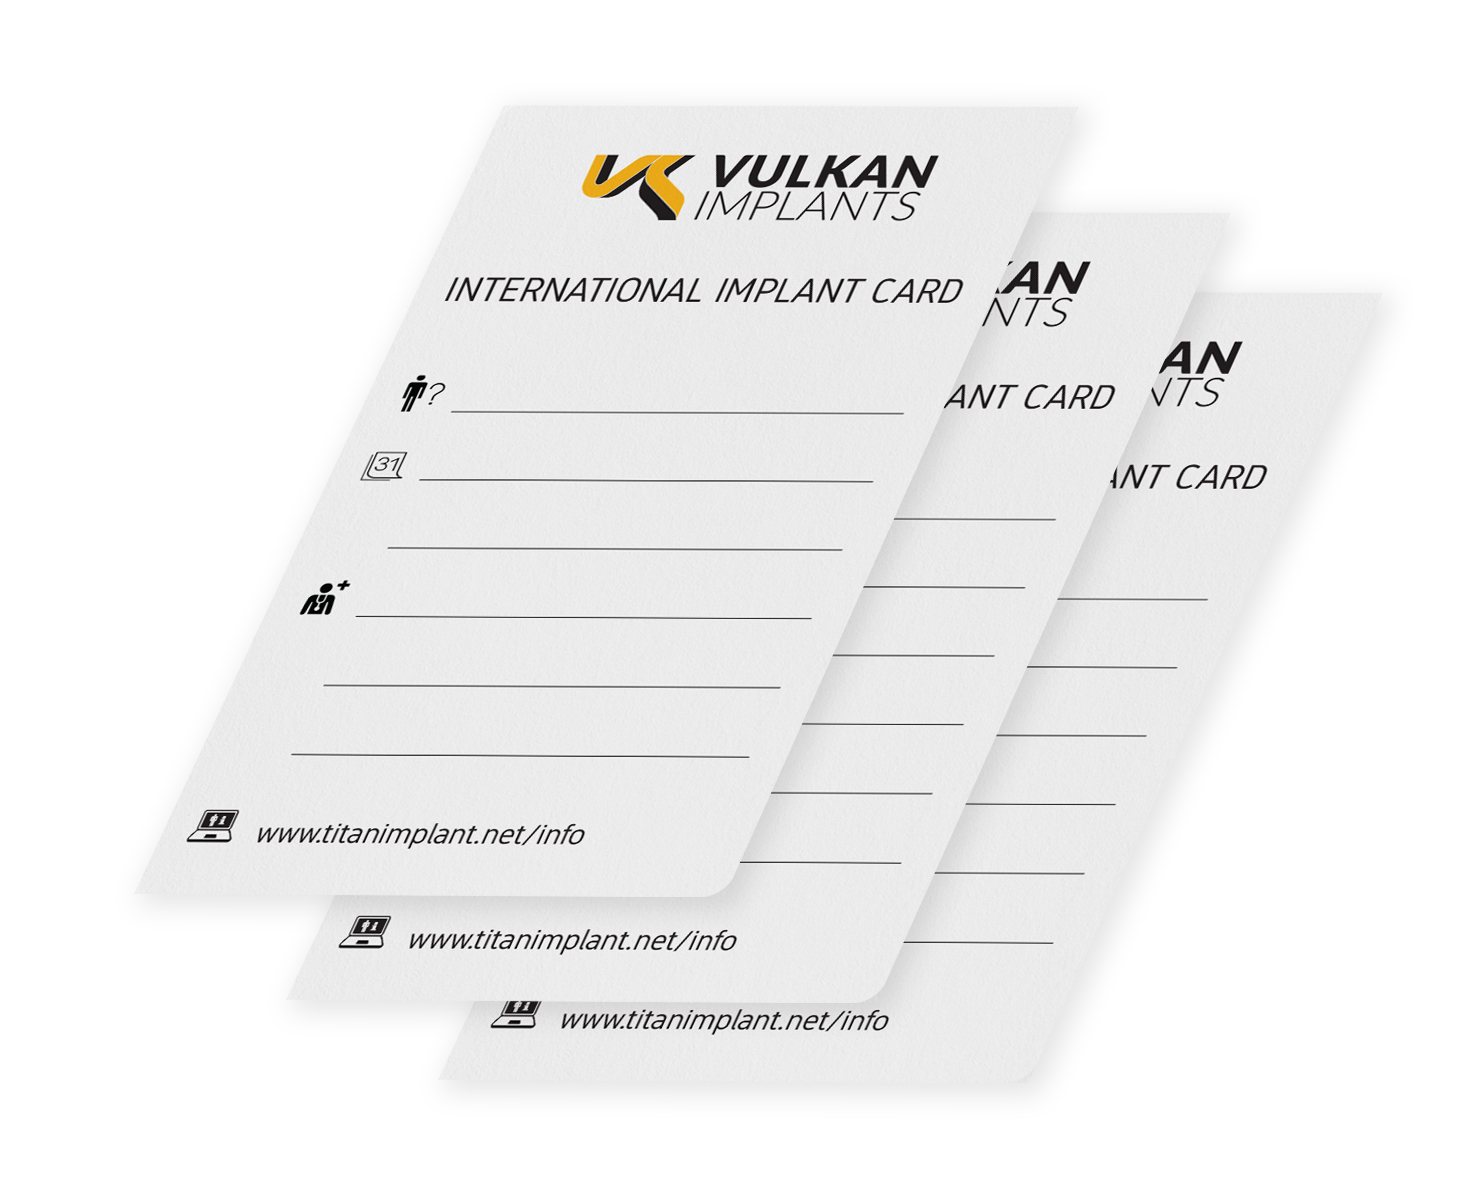 imagen International Implant Card Vulkan Implants